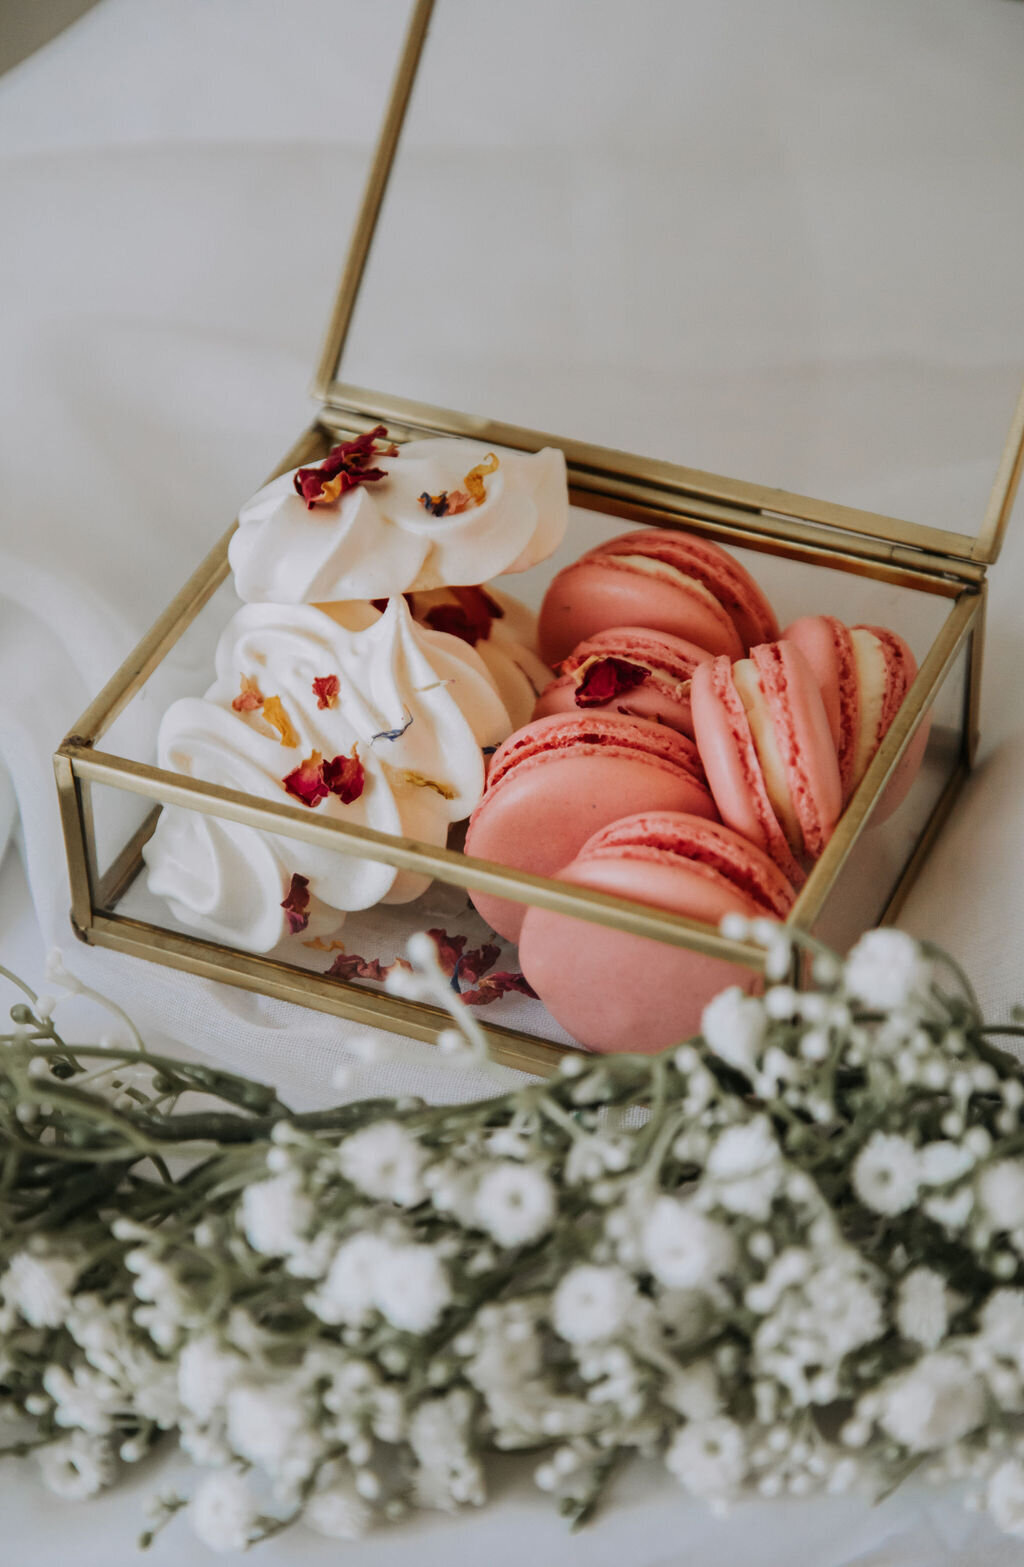 Layers-graces-Essex-Hertfordshire-floral-wedding-cake-designer-3